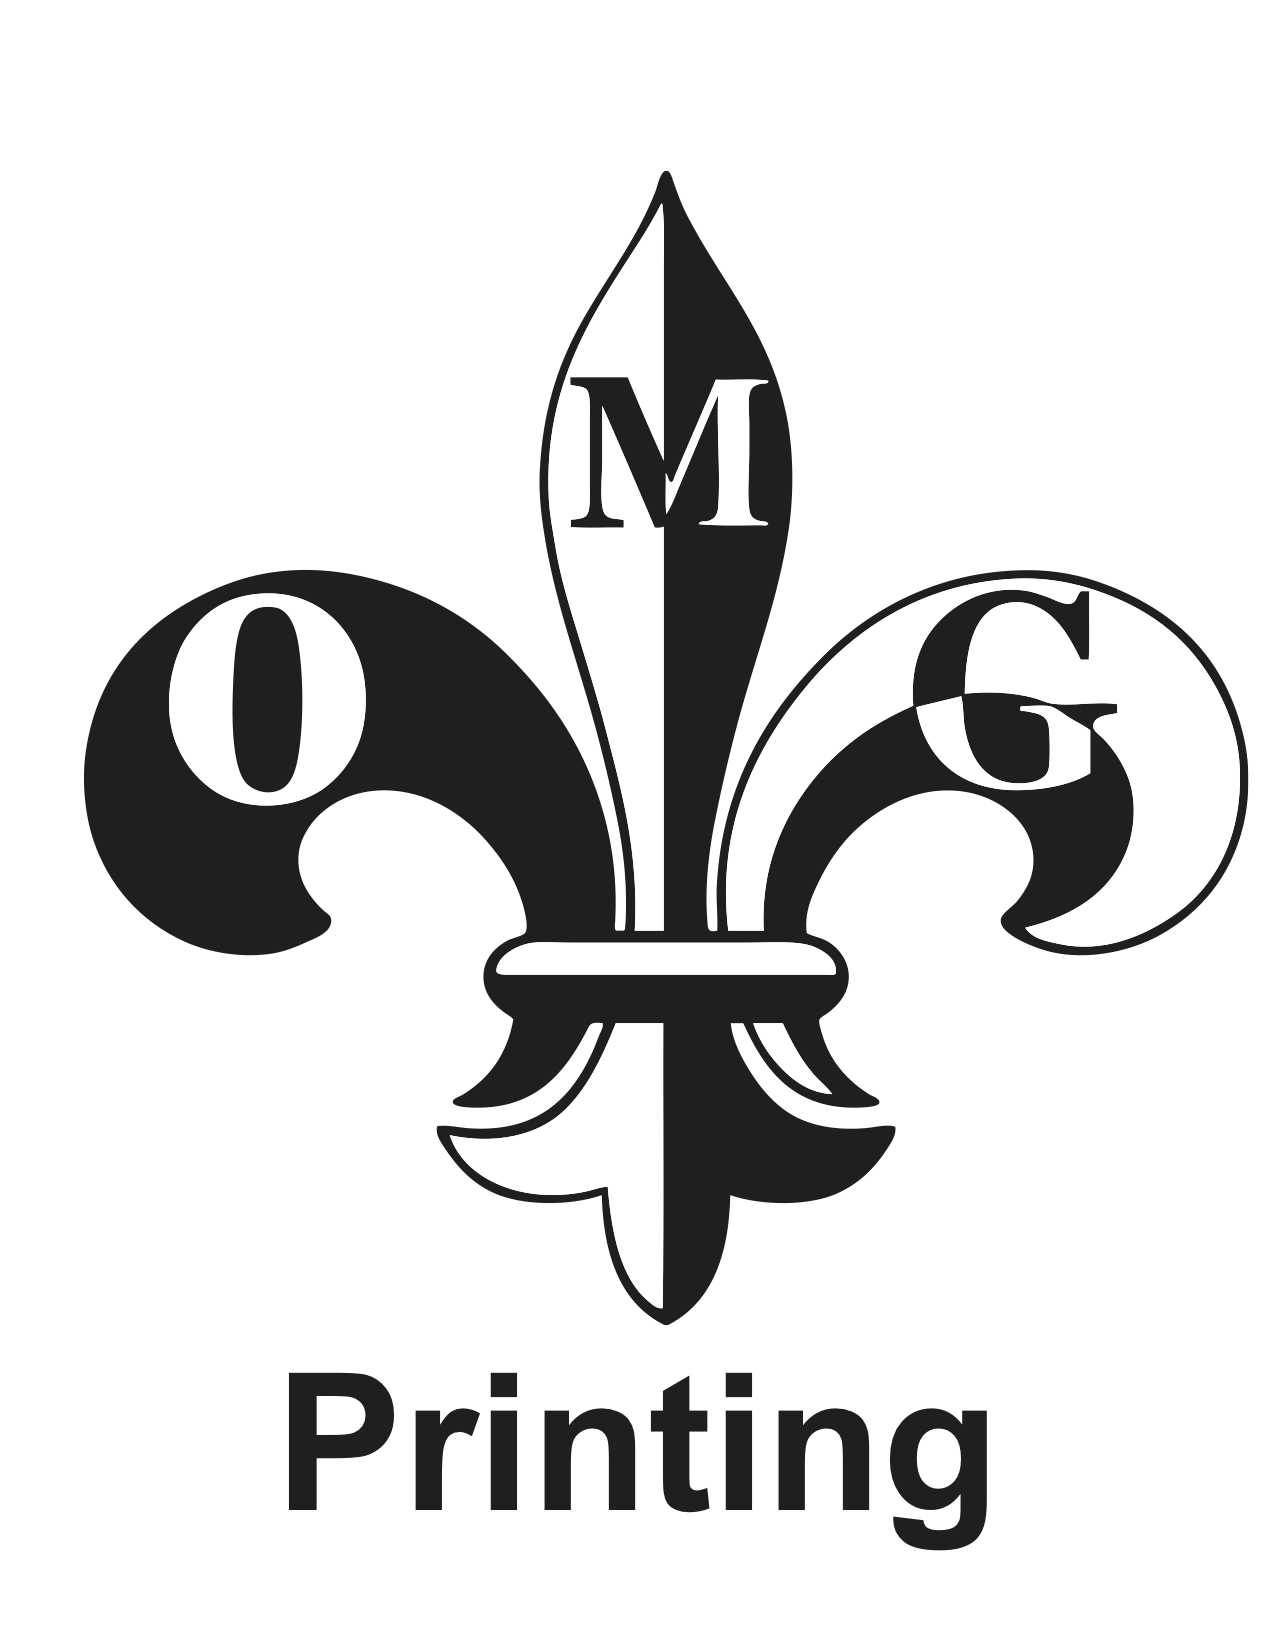 OMG Printing, Inc. Logo